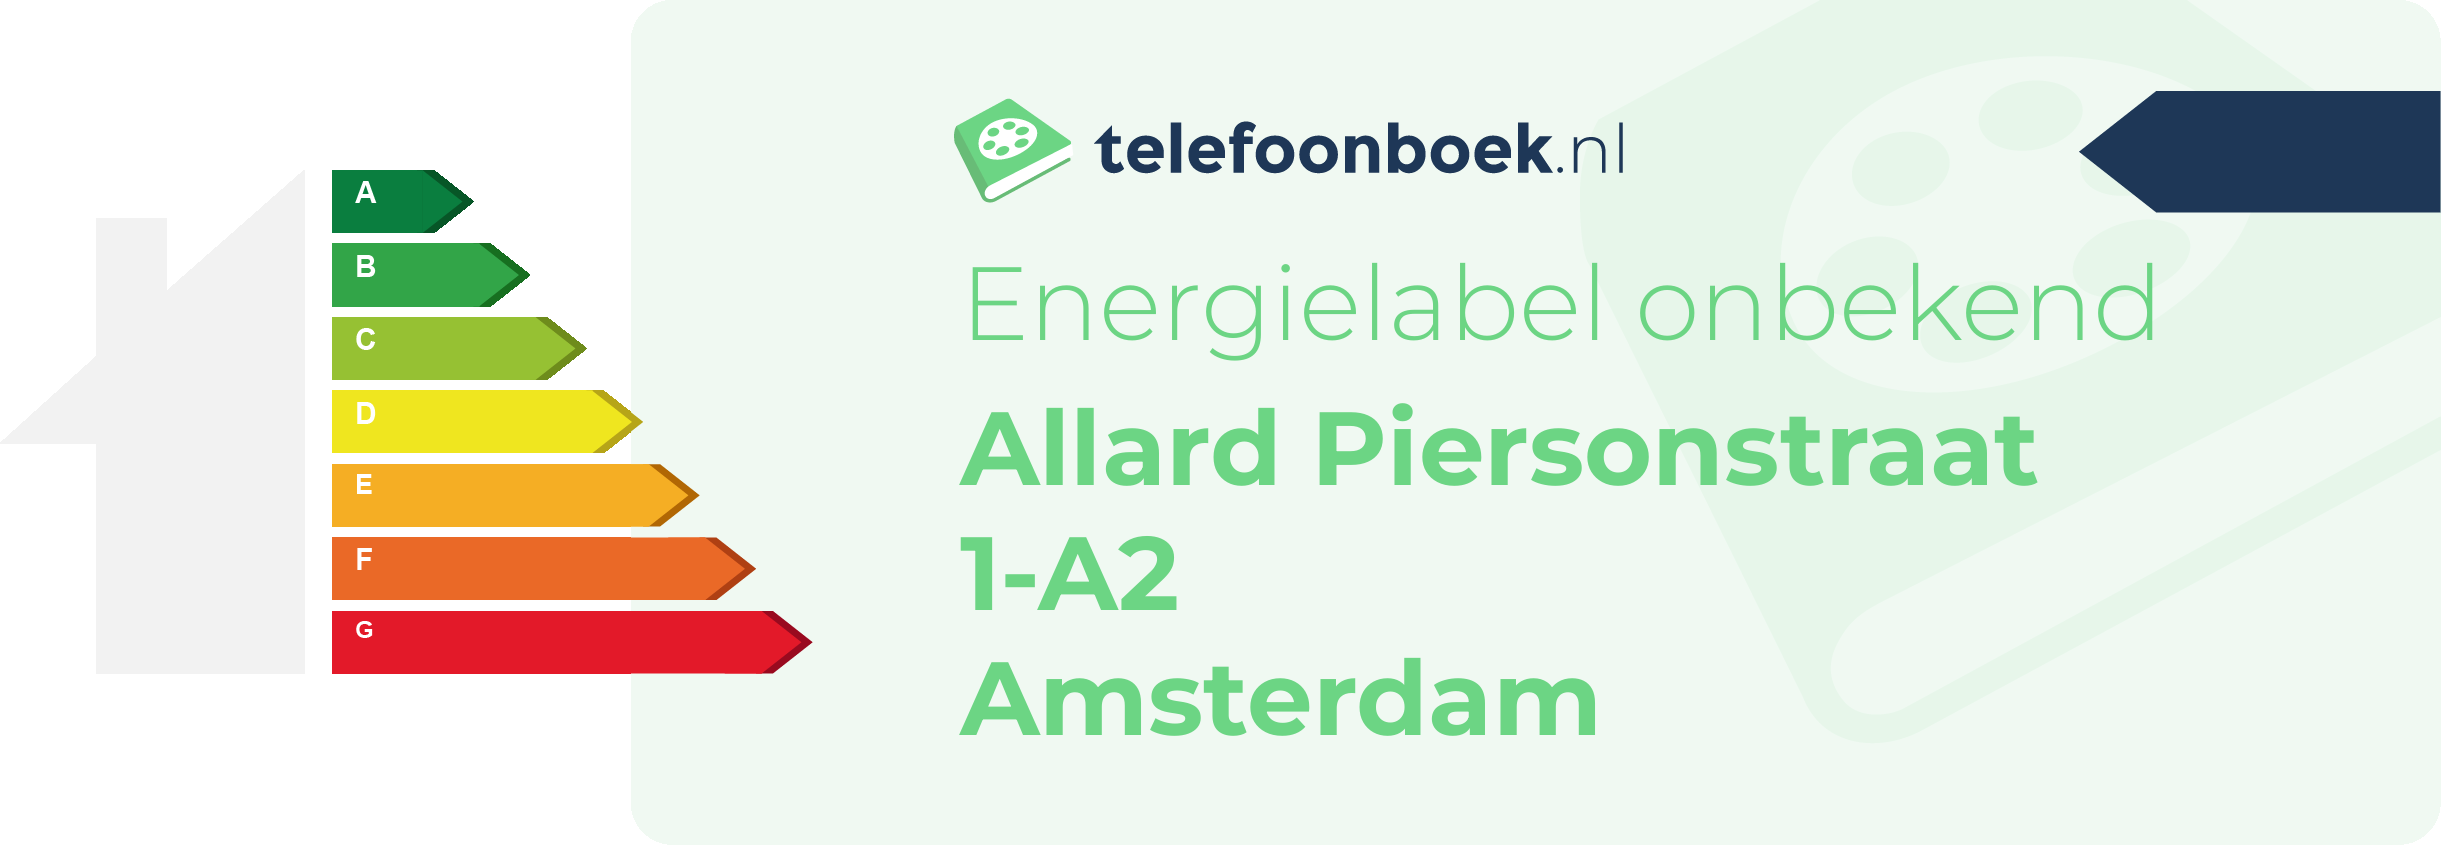 Energielabel Allard Piersonstraat 1-A2 Amsterdam